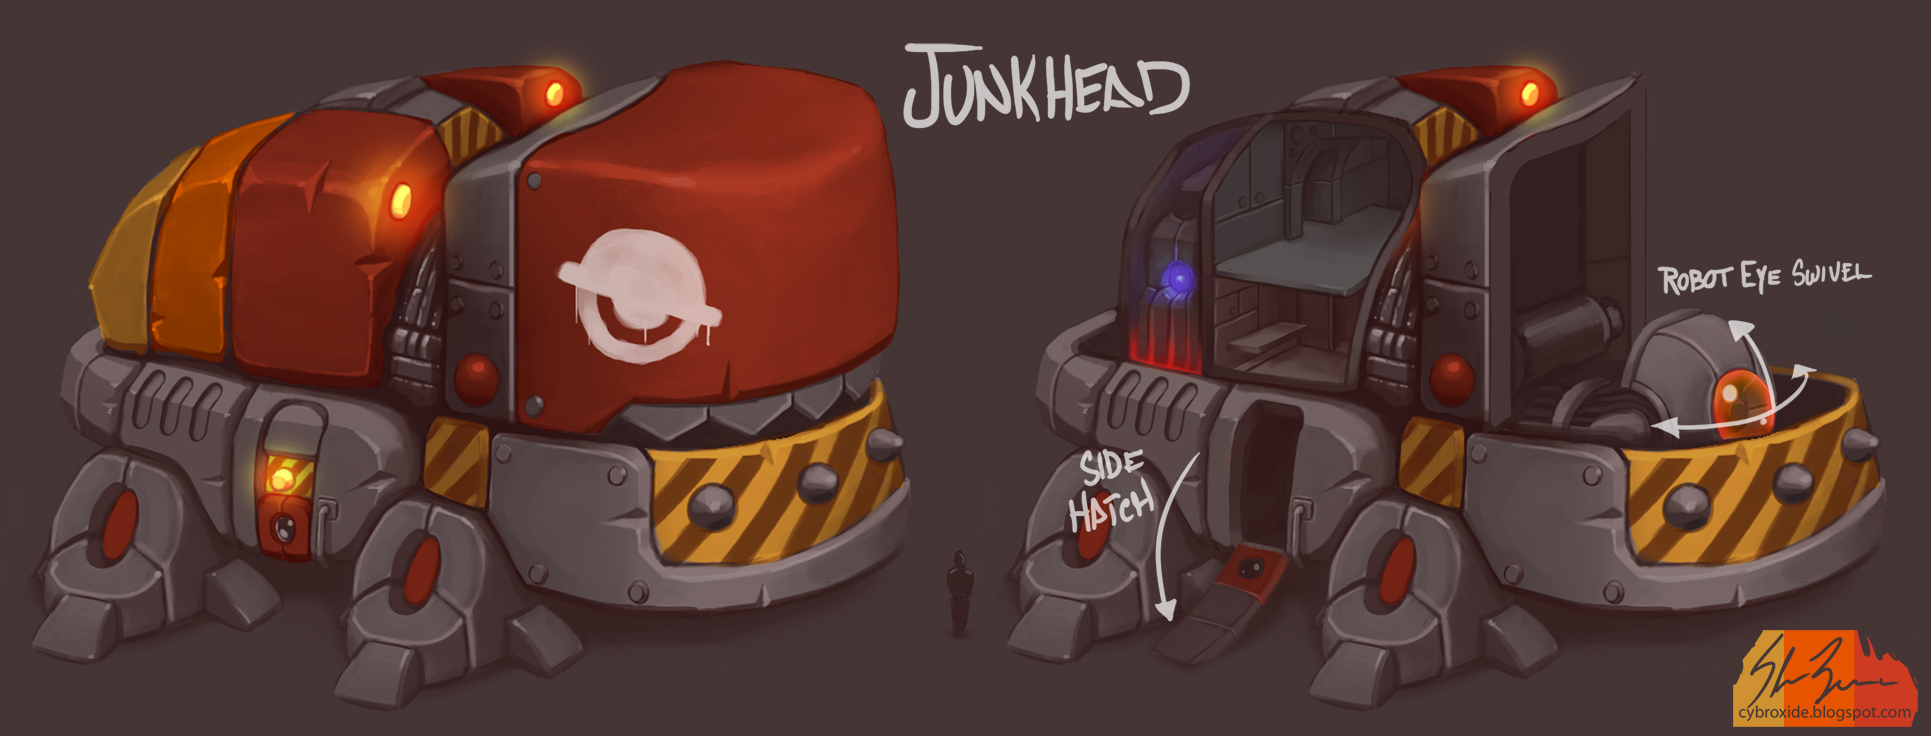 Junkhead_Design.jpg